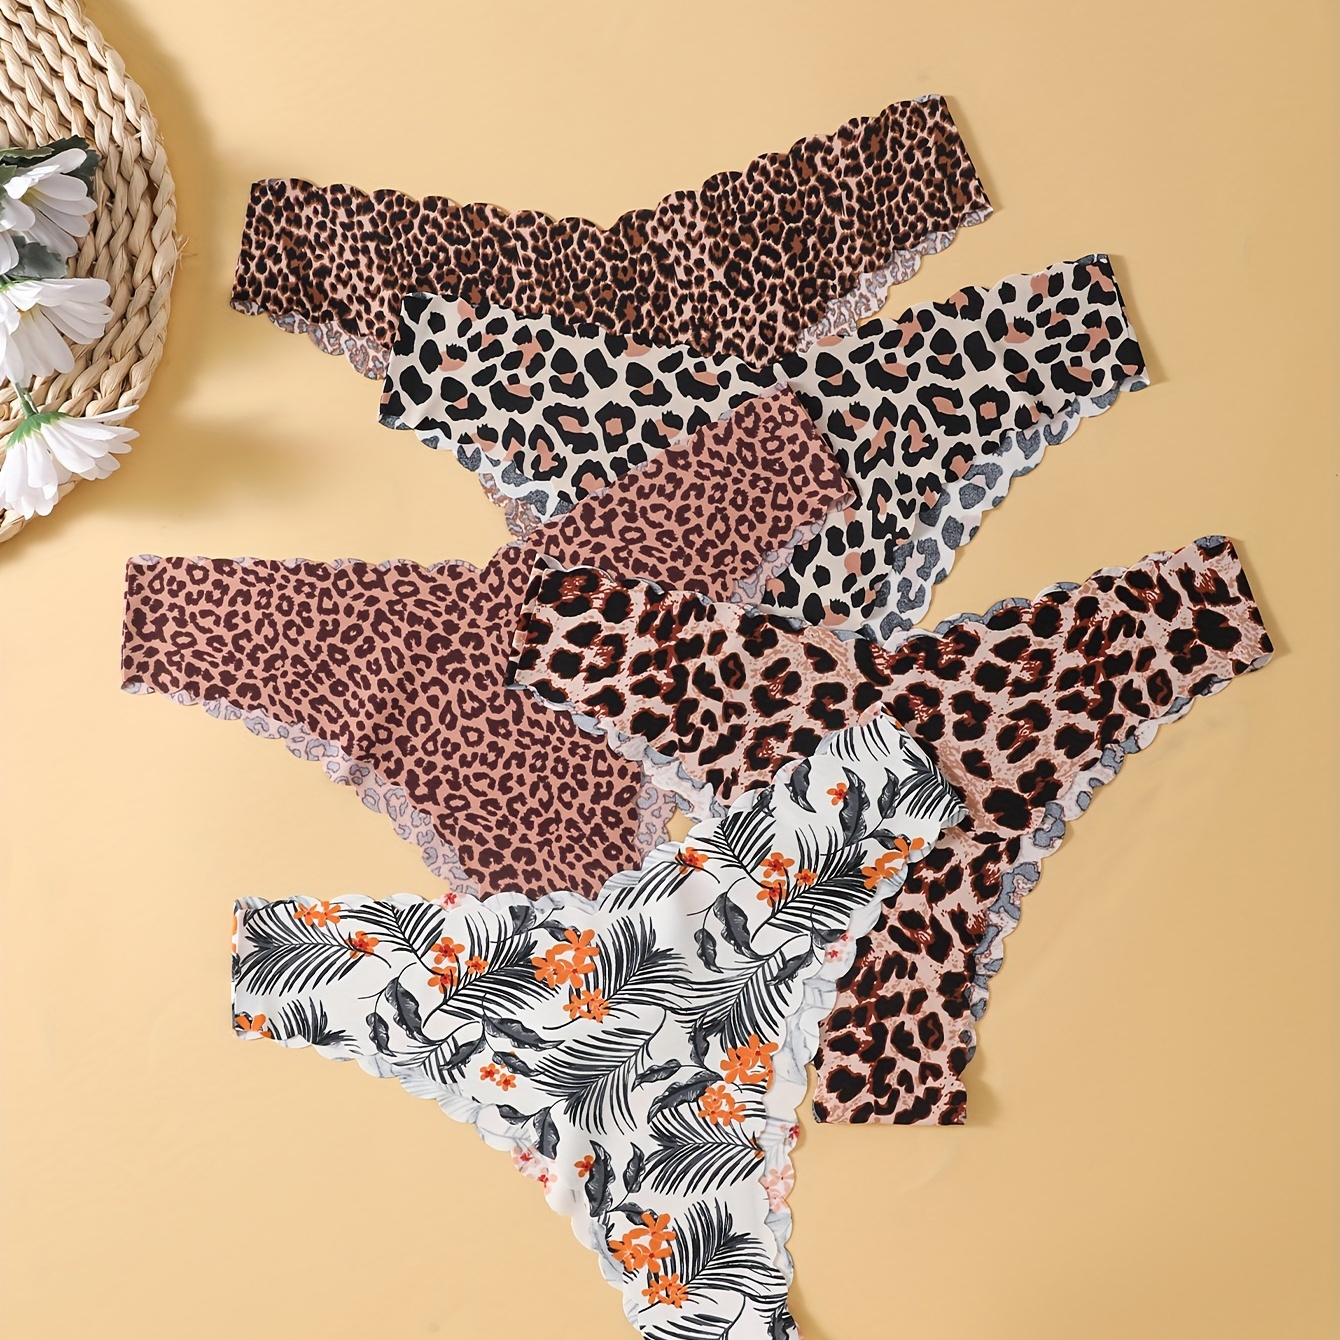 

5pcs Leopard Print Seamless Briefs, Fashion & Breathable Intimates Panties, Women's Lingerie & Underwear